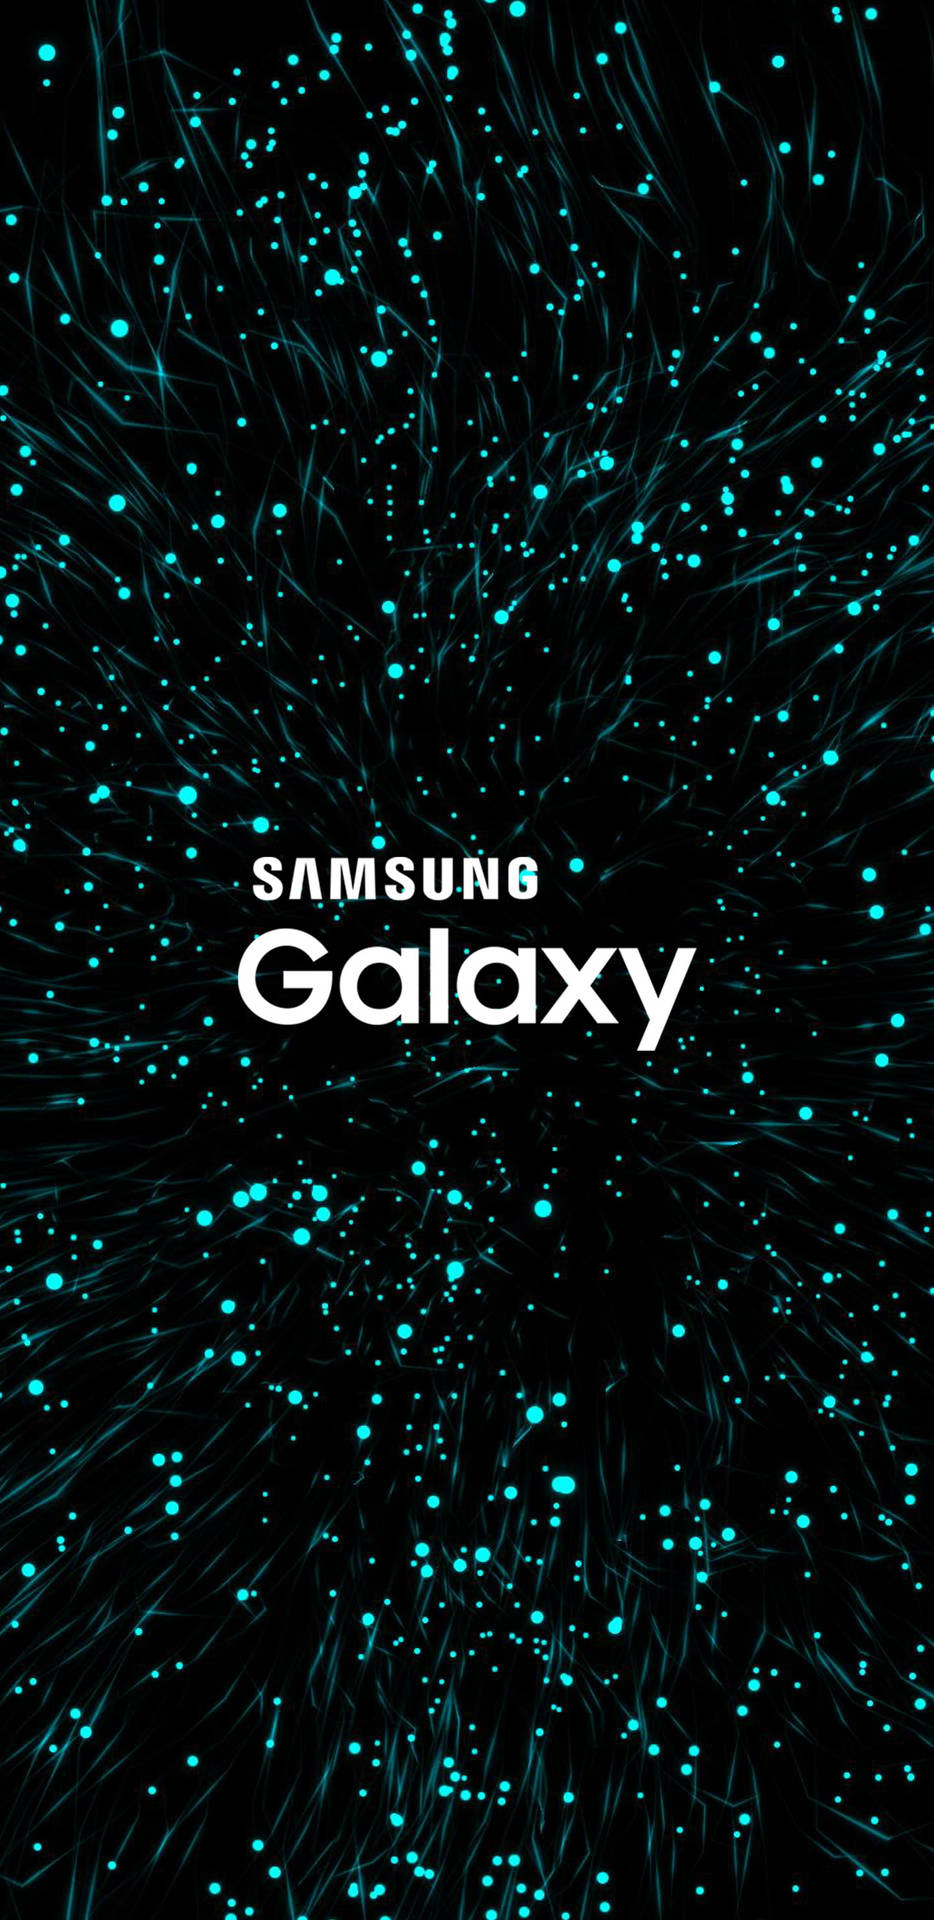 Samsung Galaxy Abstract Teal Lights